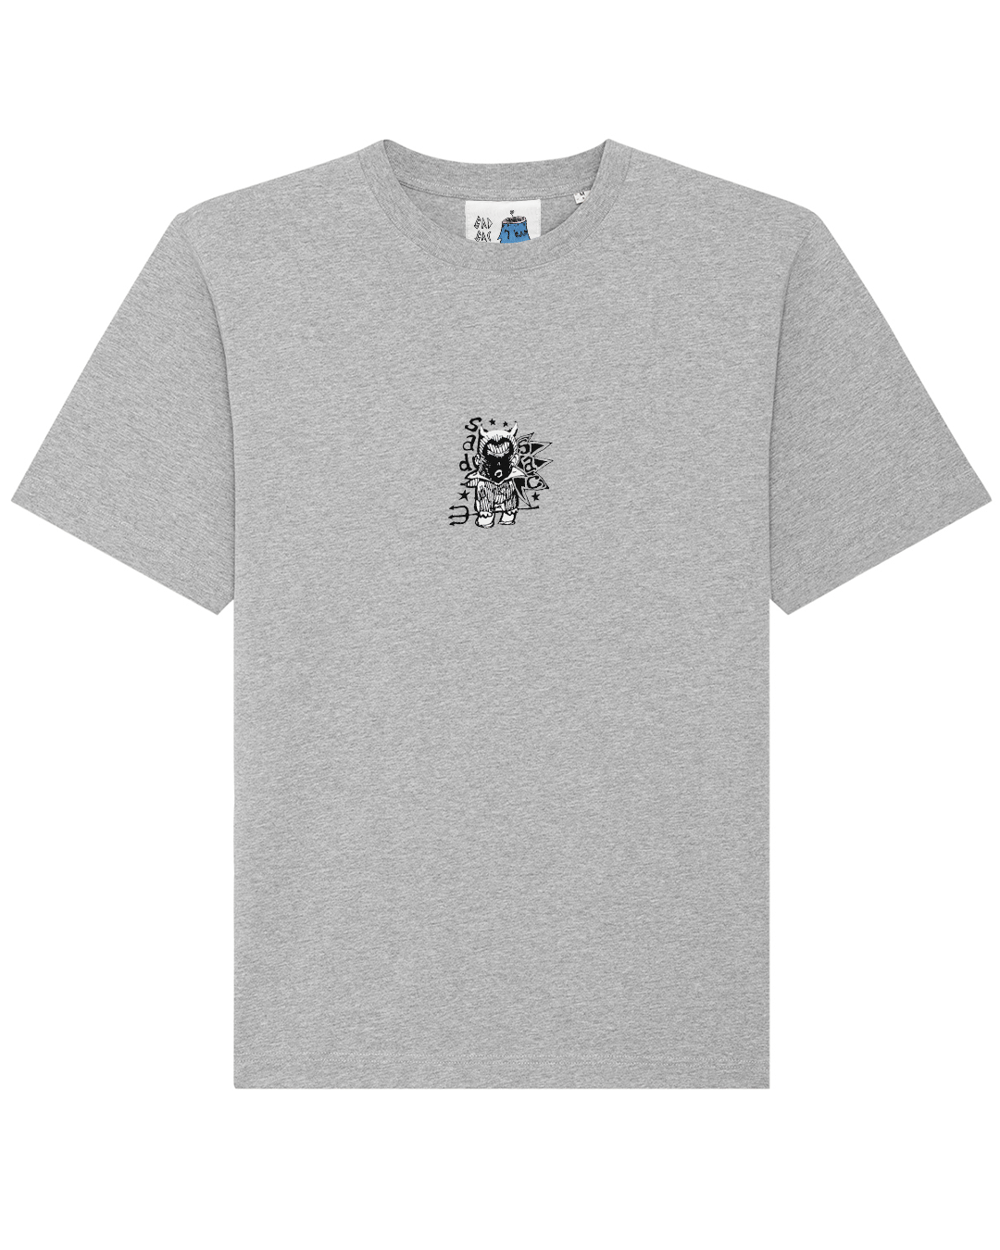 Image of “lil dvl supastar” t-shirt (heather grey)